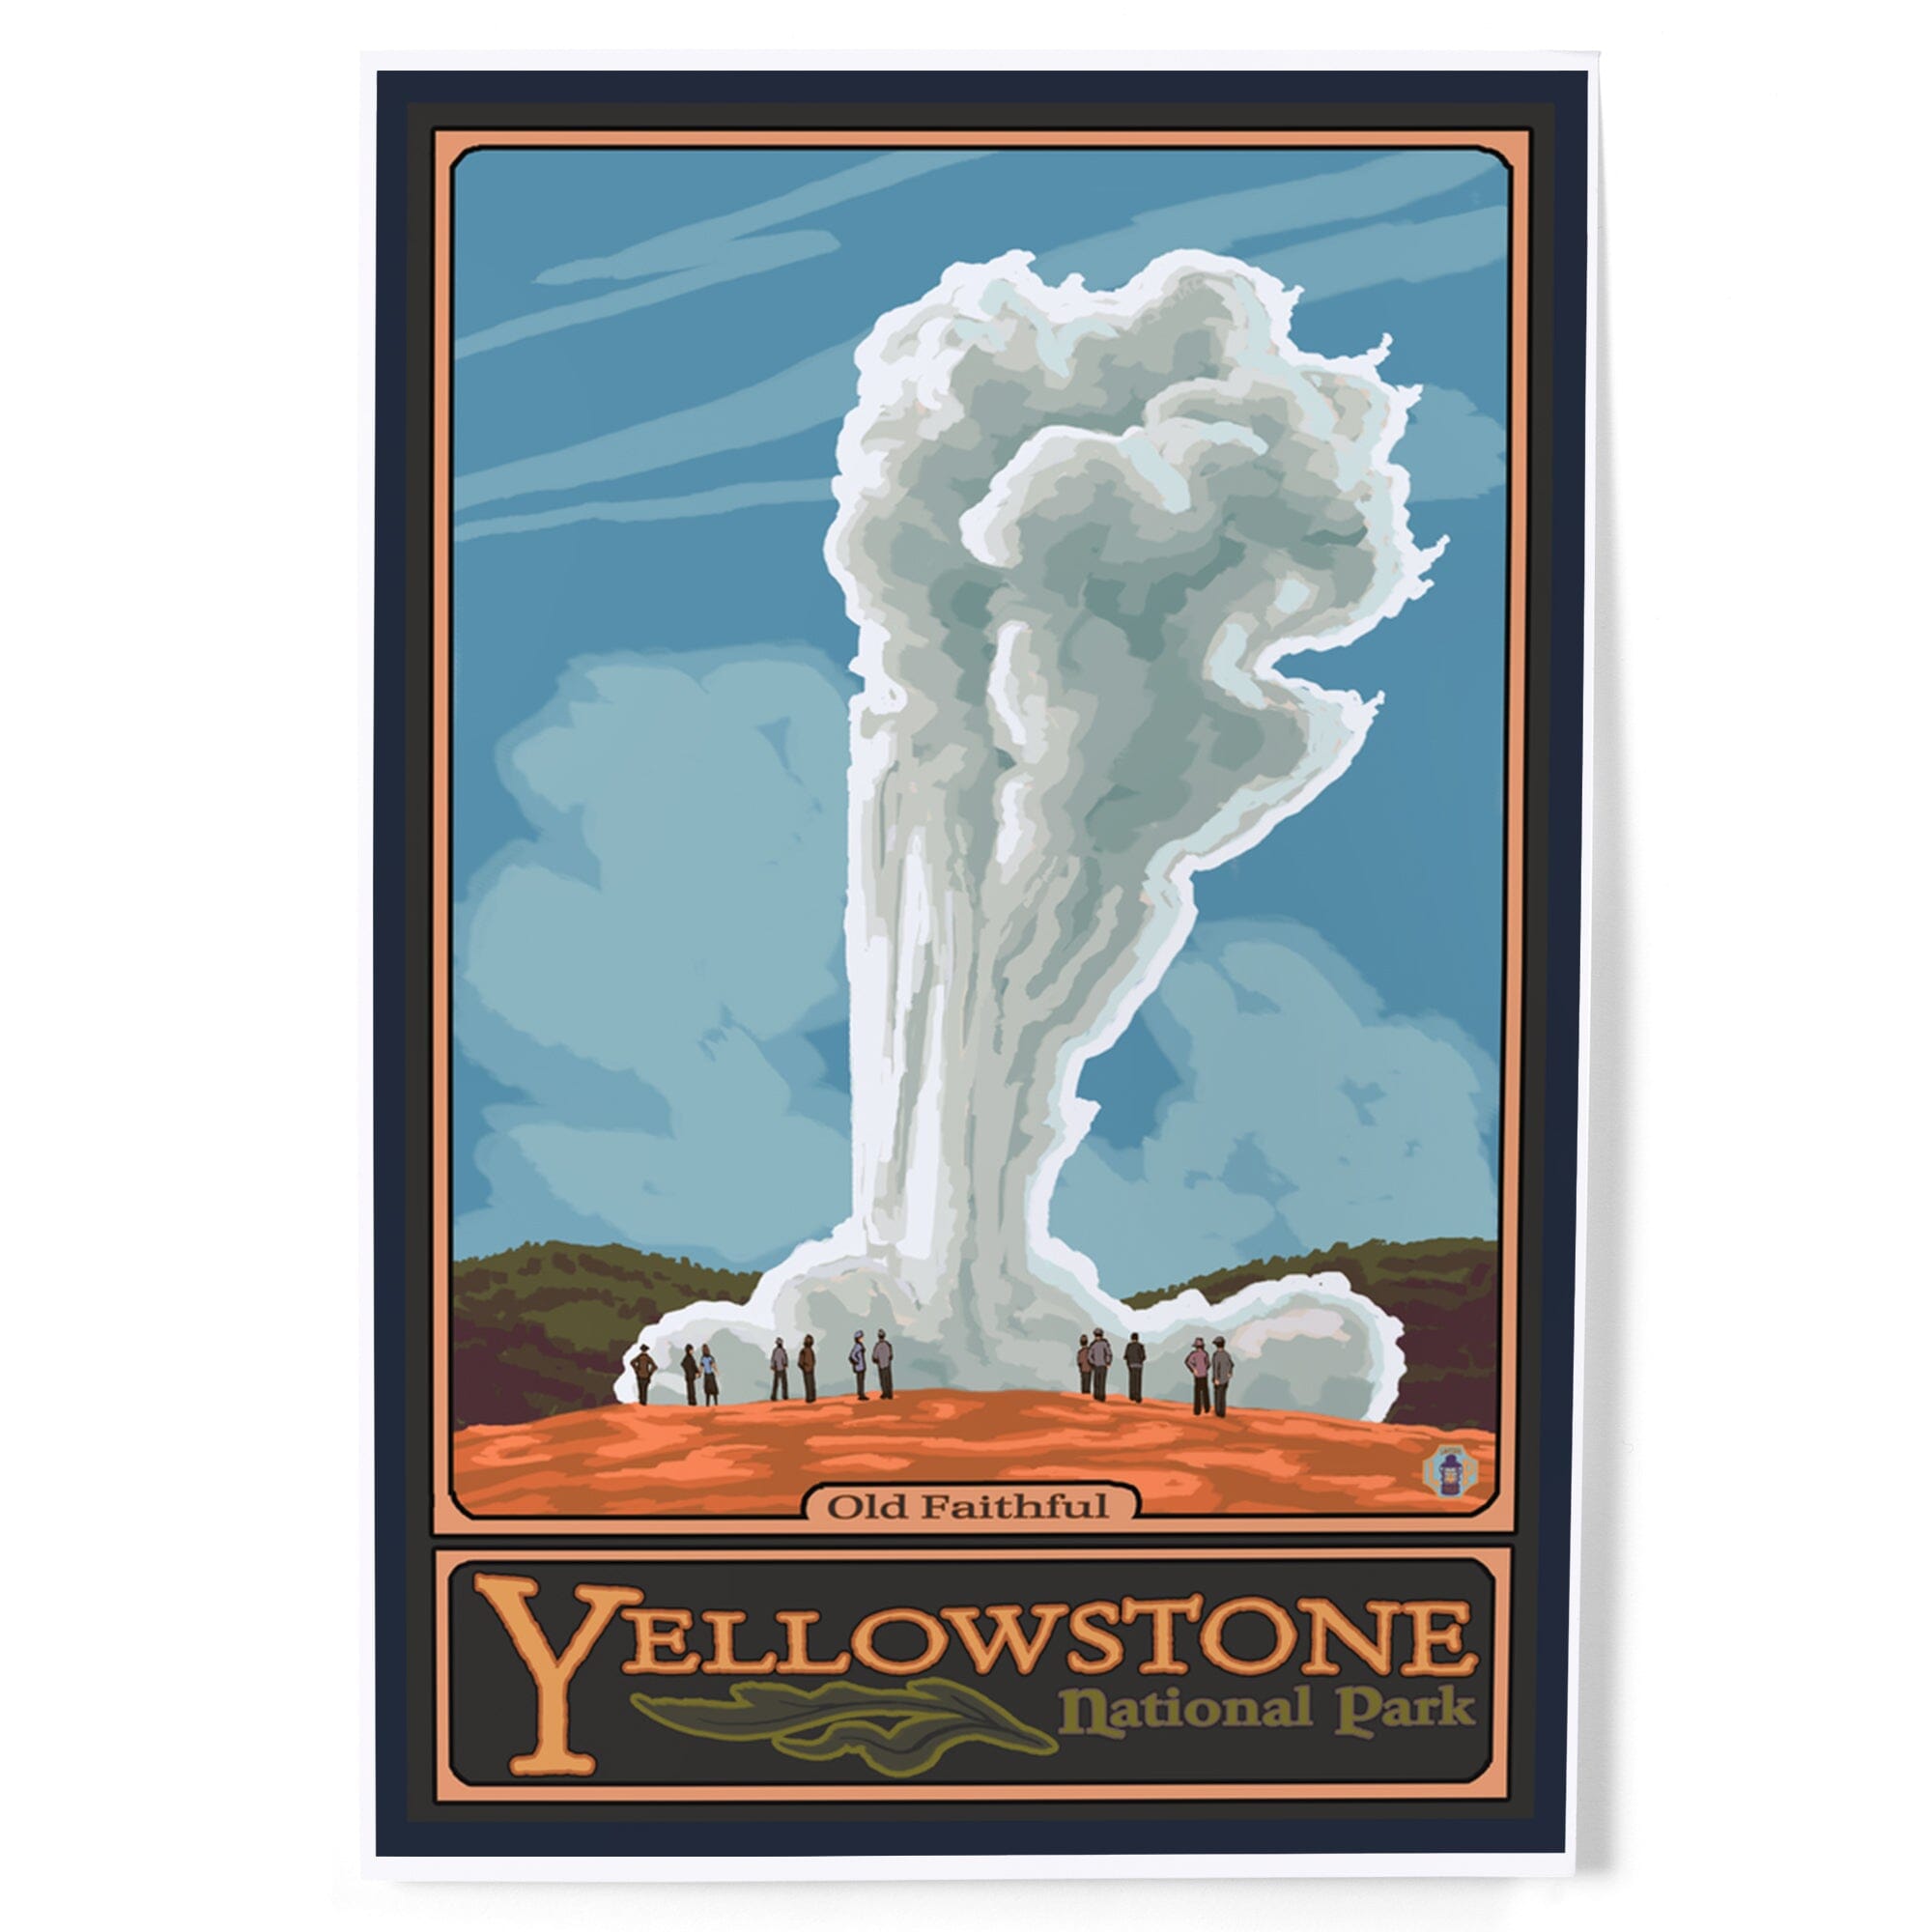 Yellowstone National Park, Wyoming, Old Faithful Geyser, Art & Giclee Prints